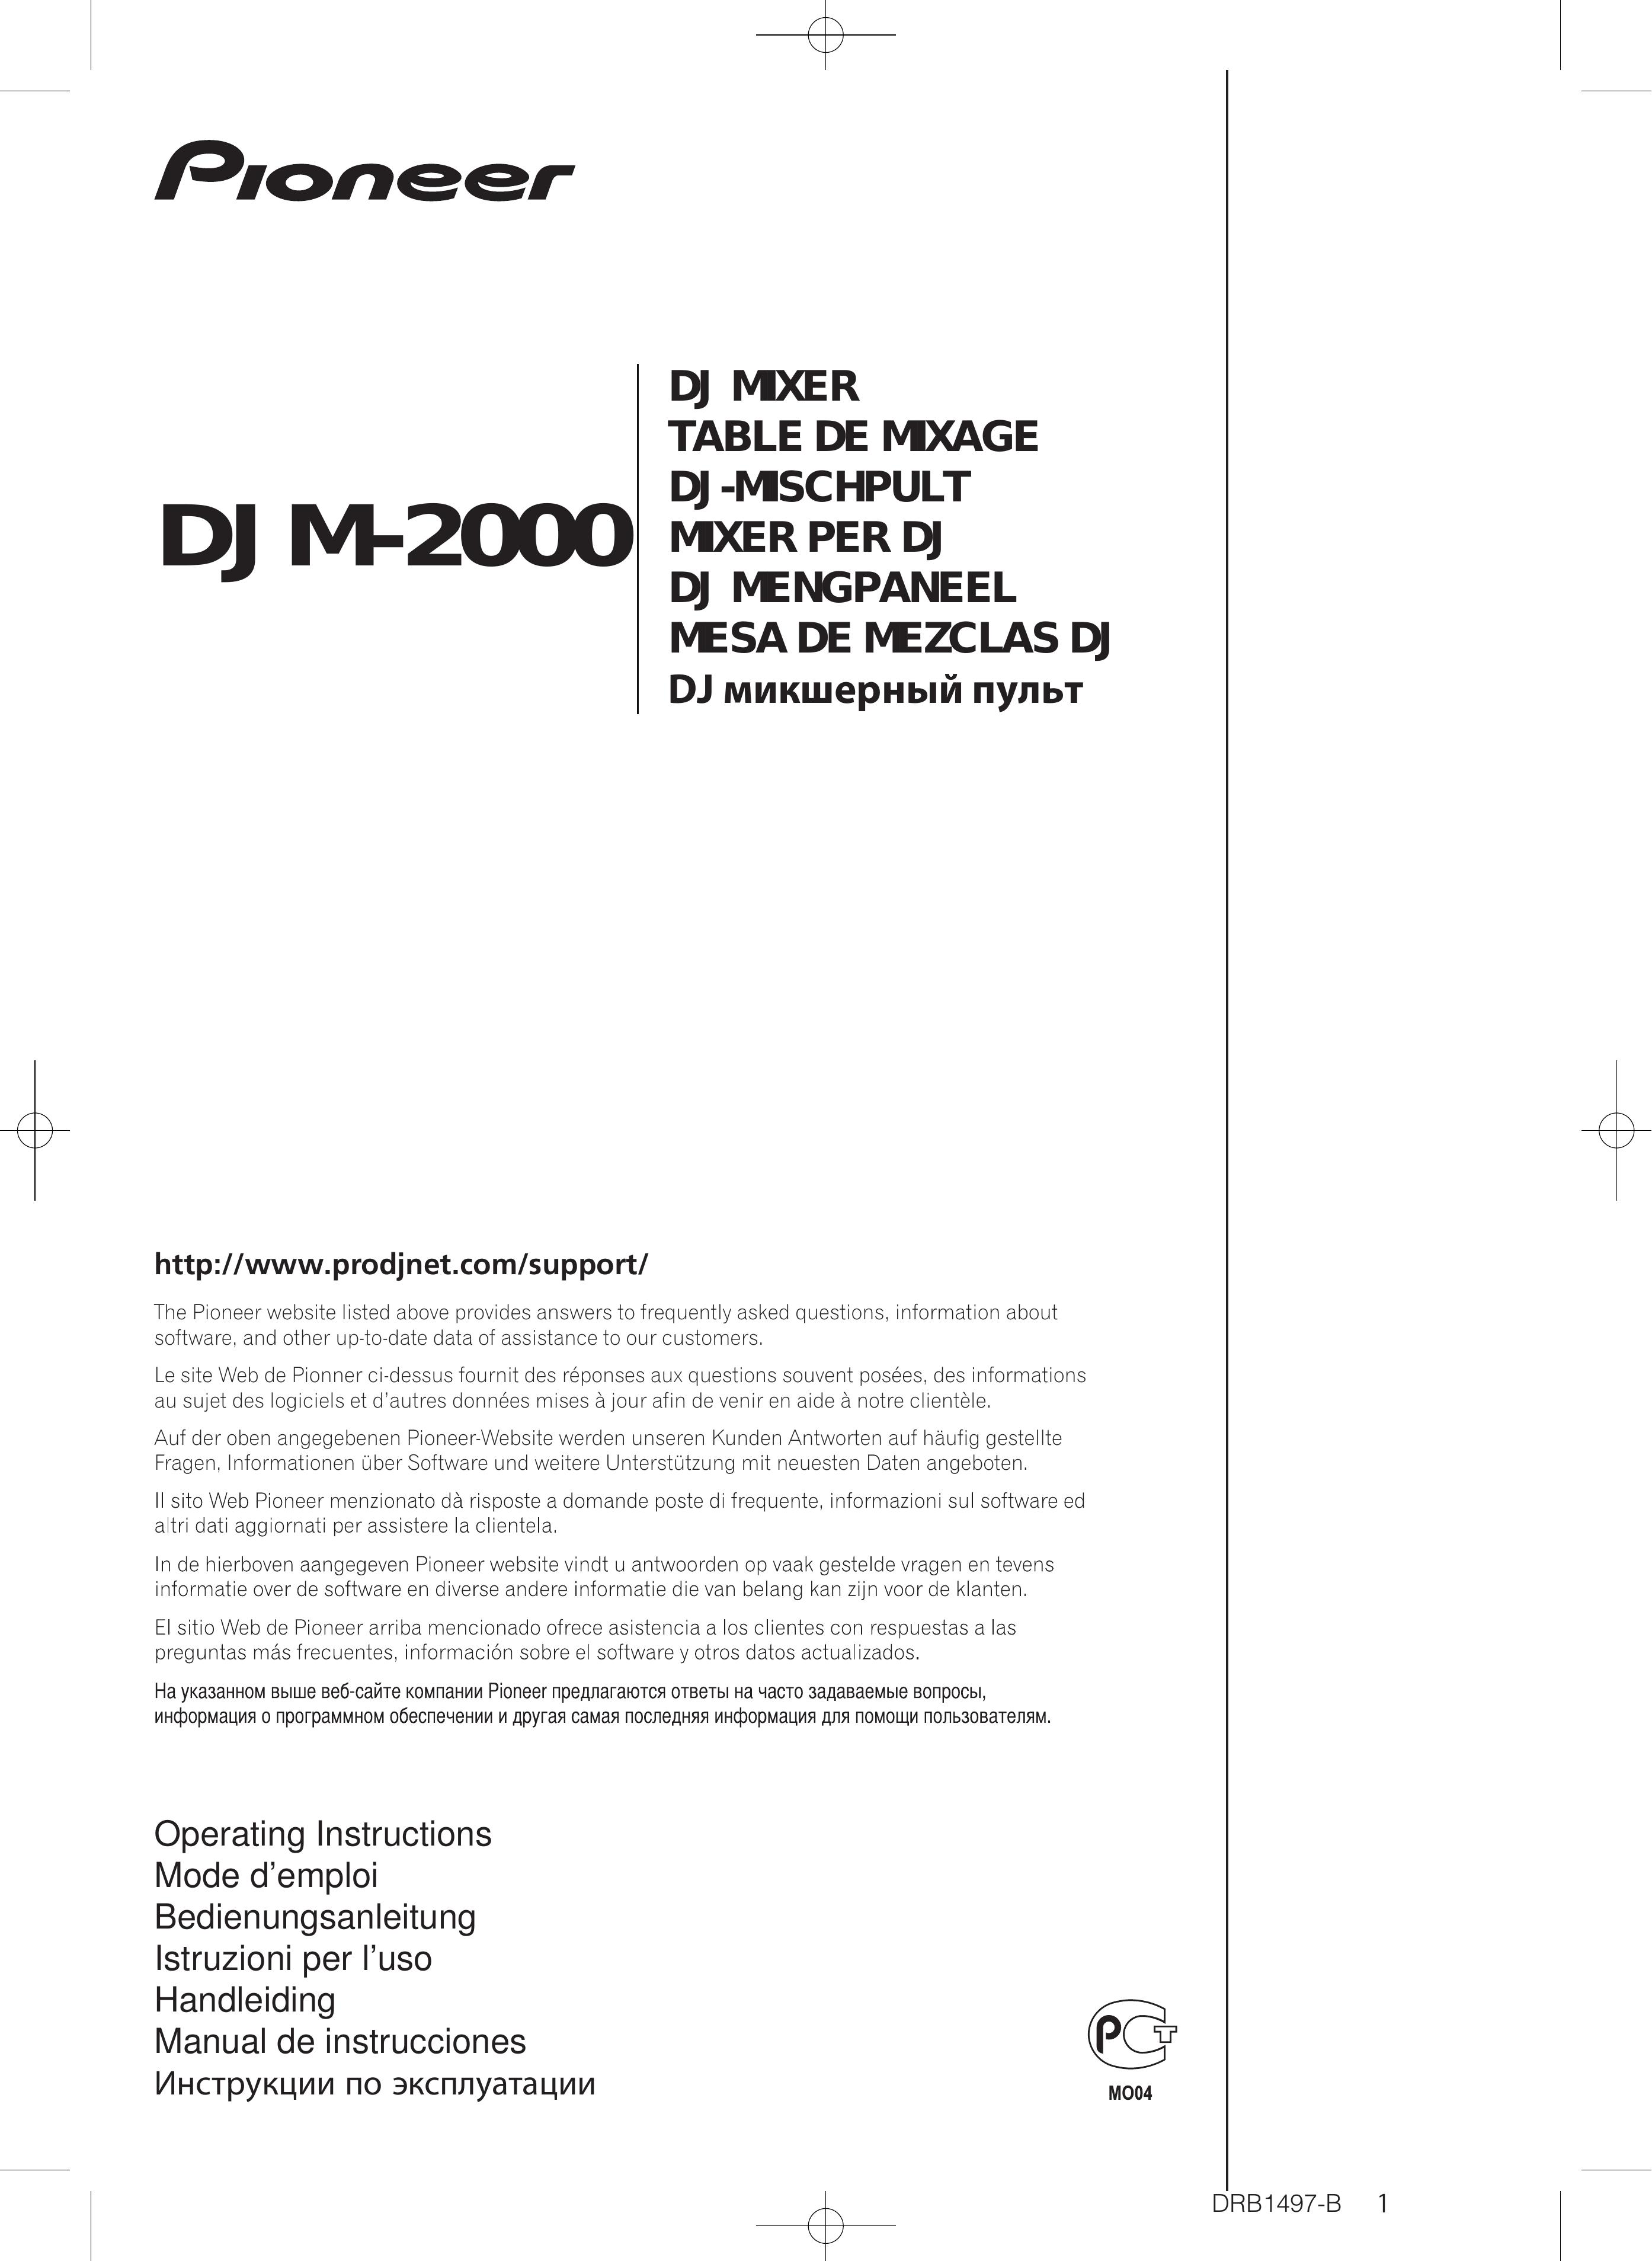 Pioneer DJM-2000 DJ Equipment User Manual